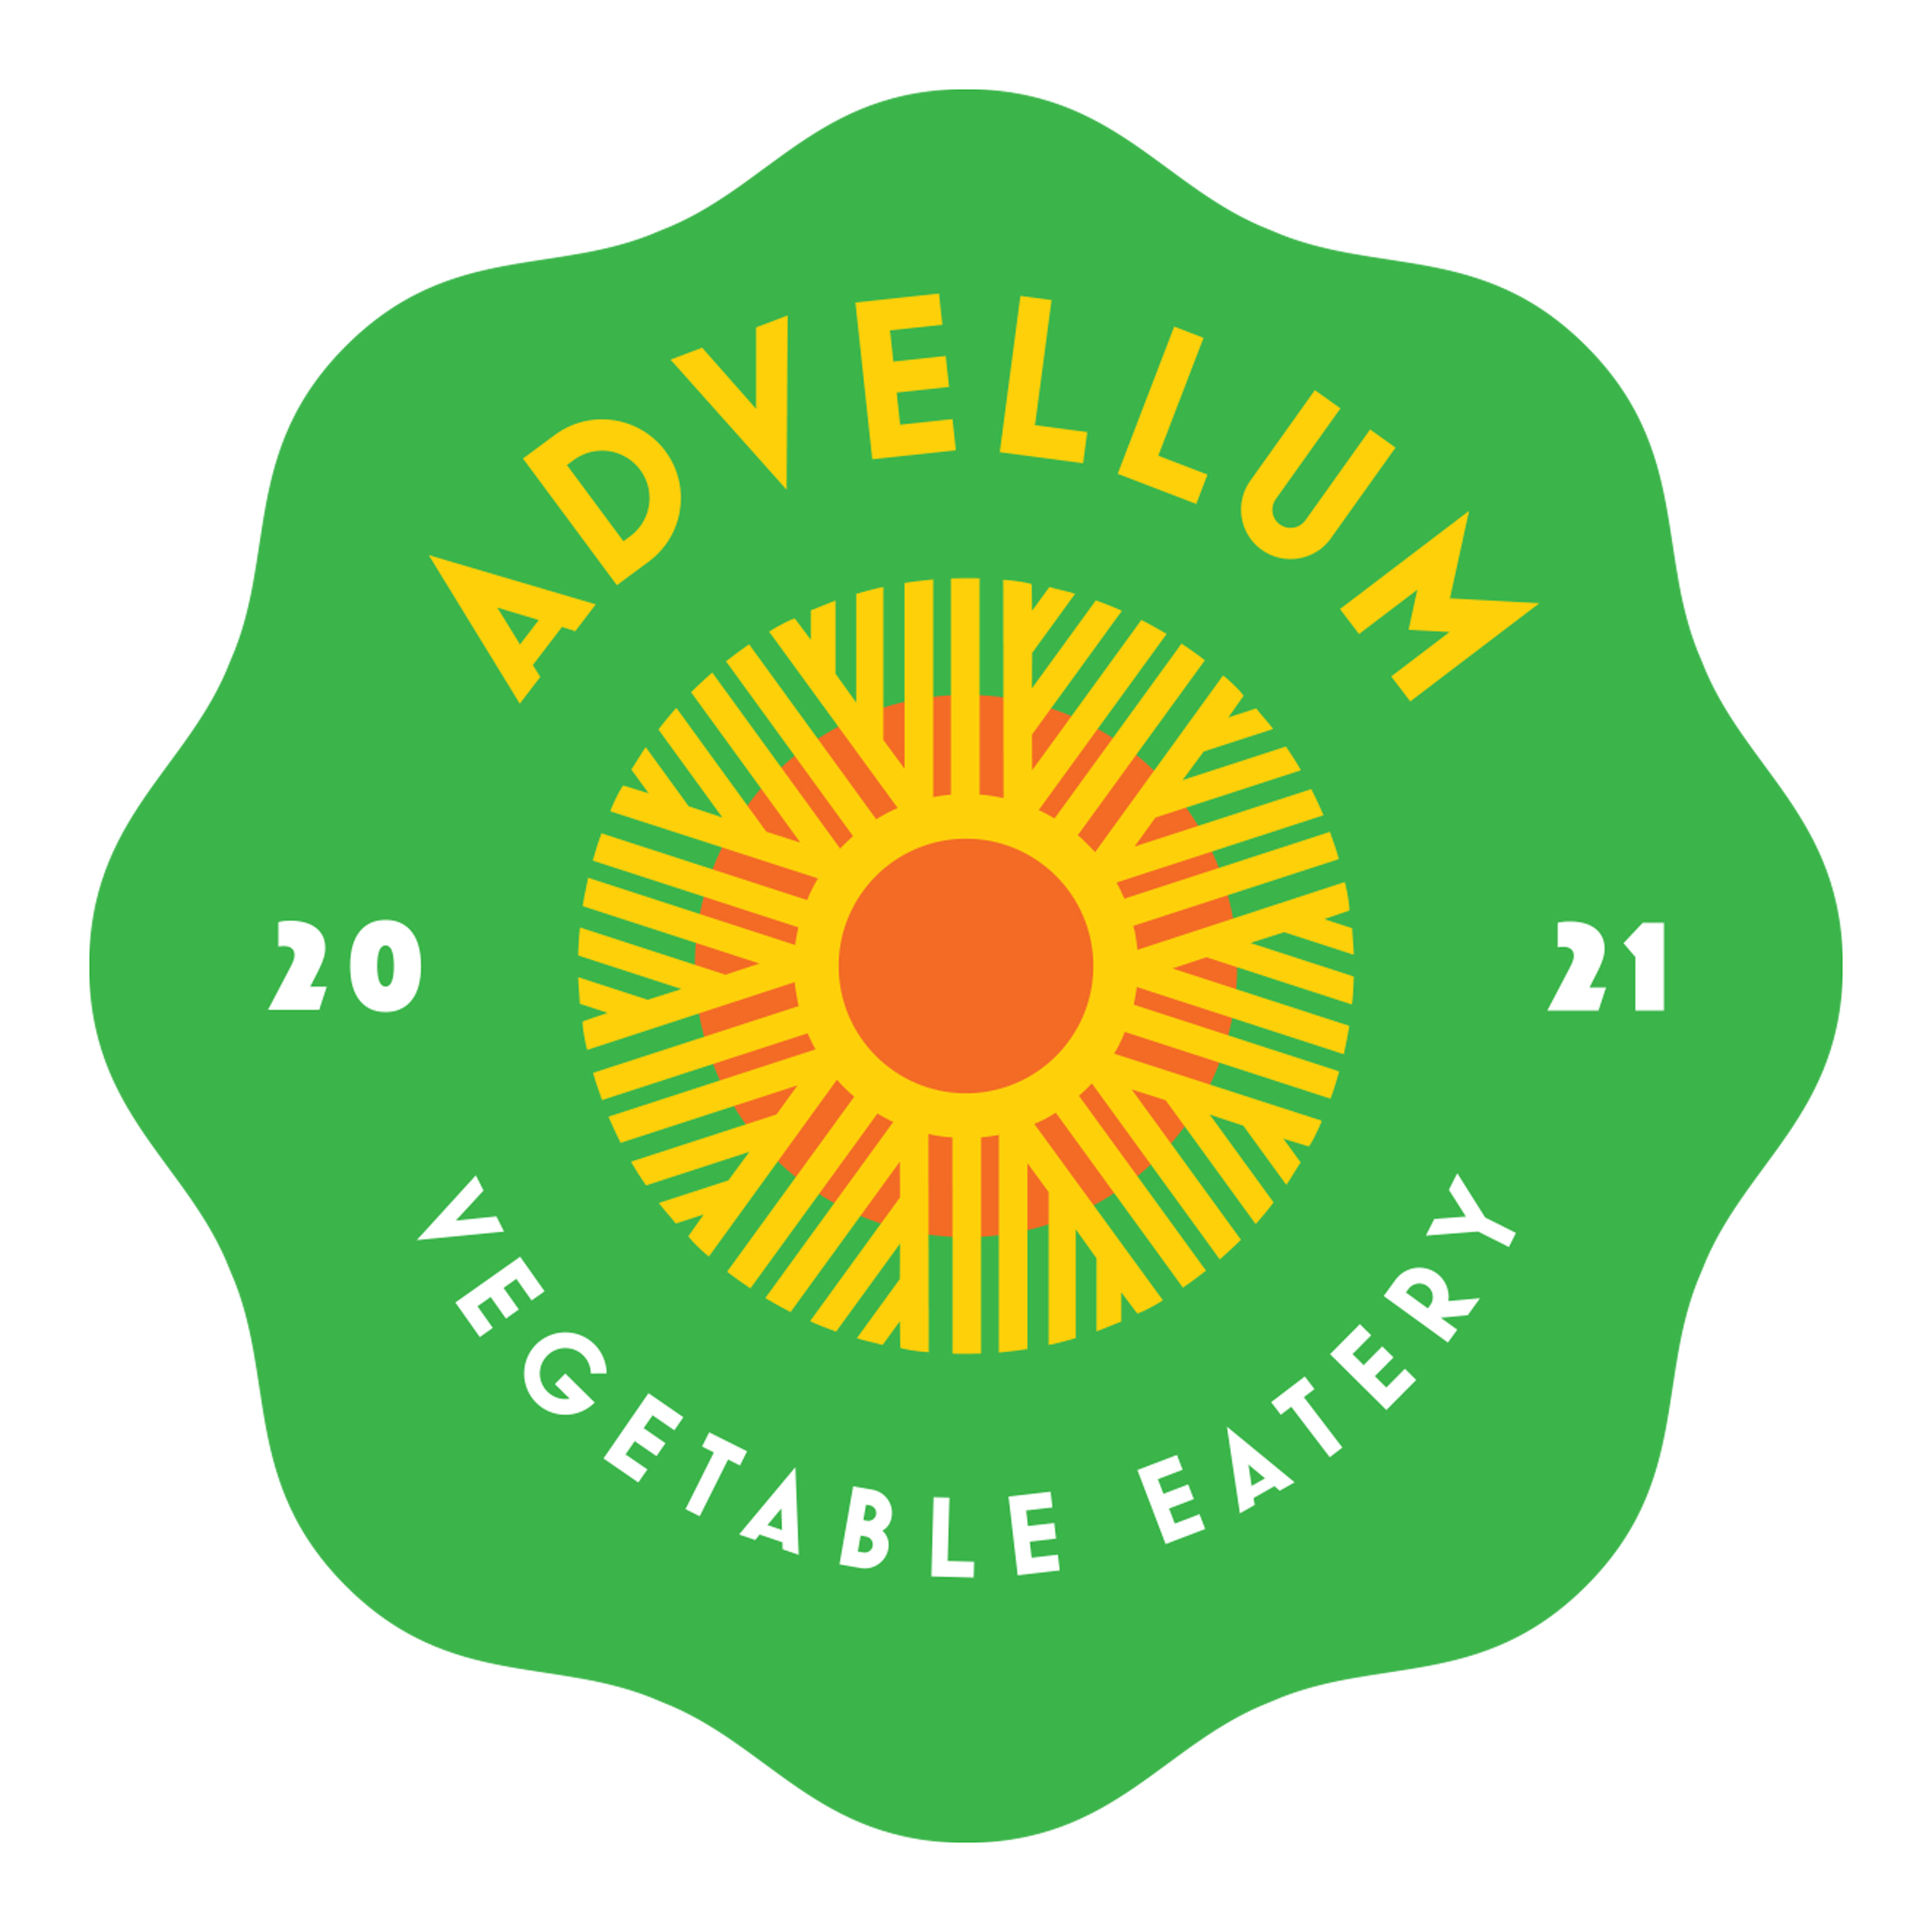 Advellum Vegetable Eatery